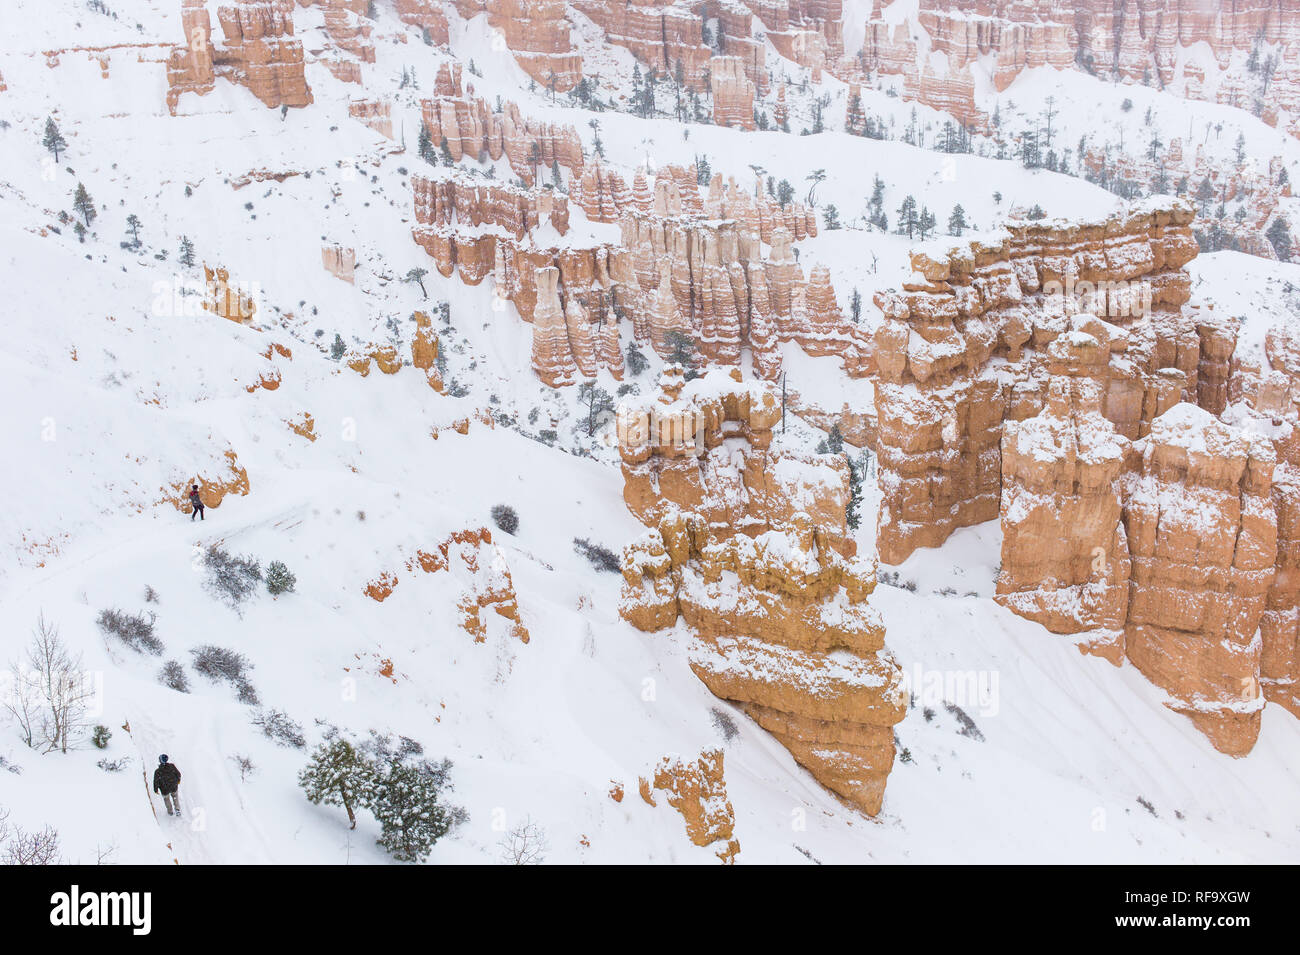 Höhe Bryce Canyon National Park, Paunsaugunt Plateau, Utah, Schnee im Winter, die Gegensatz zum berühmten roten Rock im Park Hoodoos Stockfoto